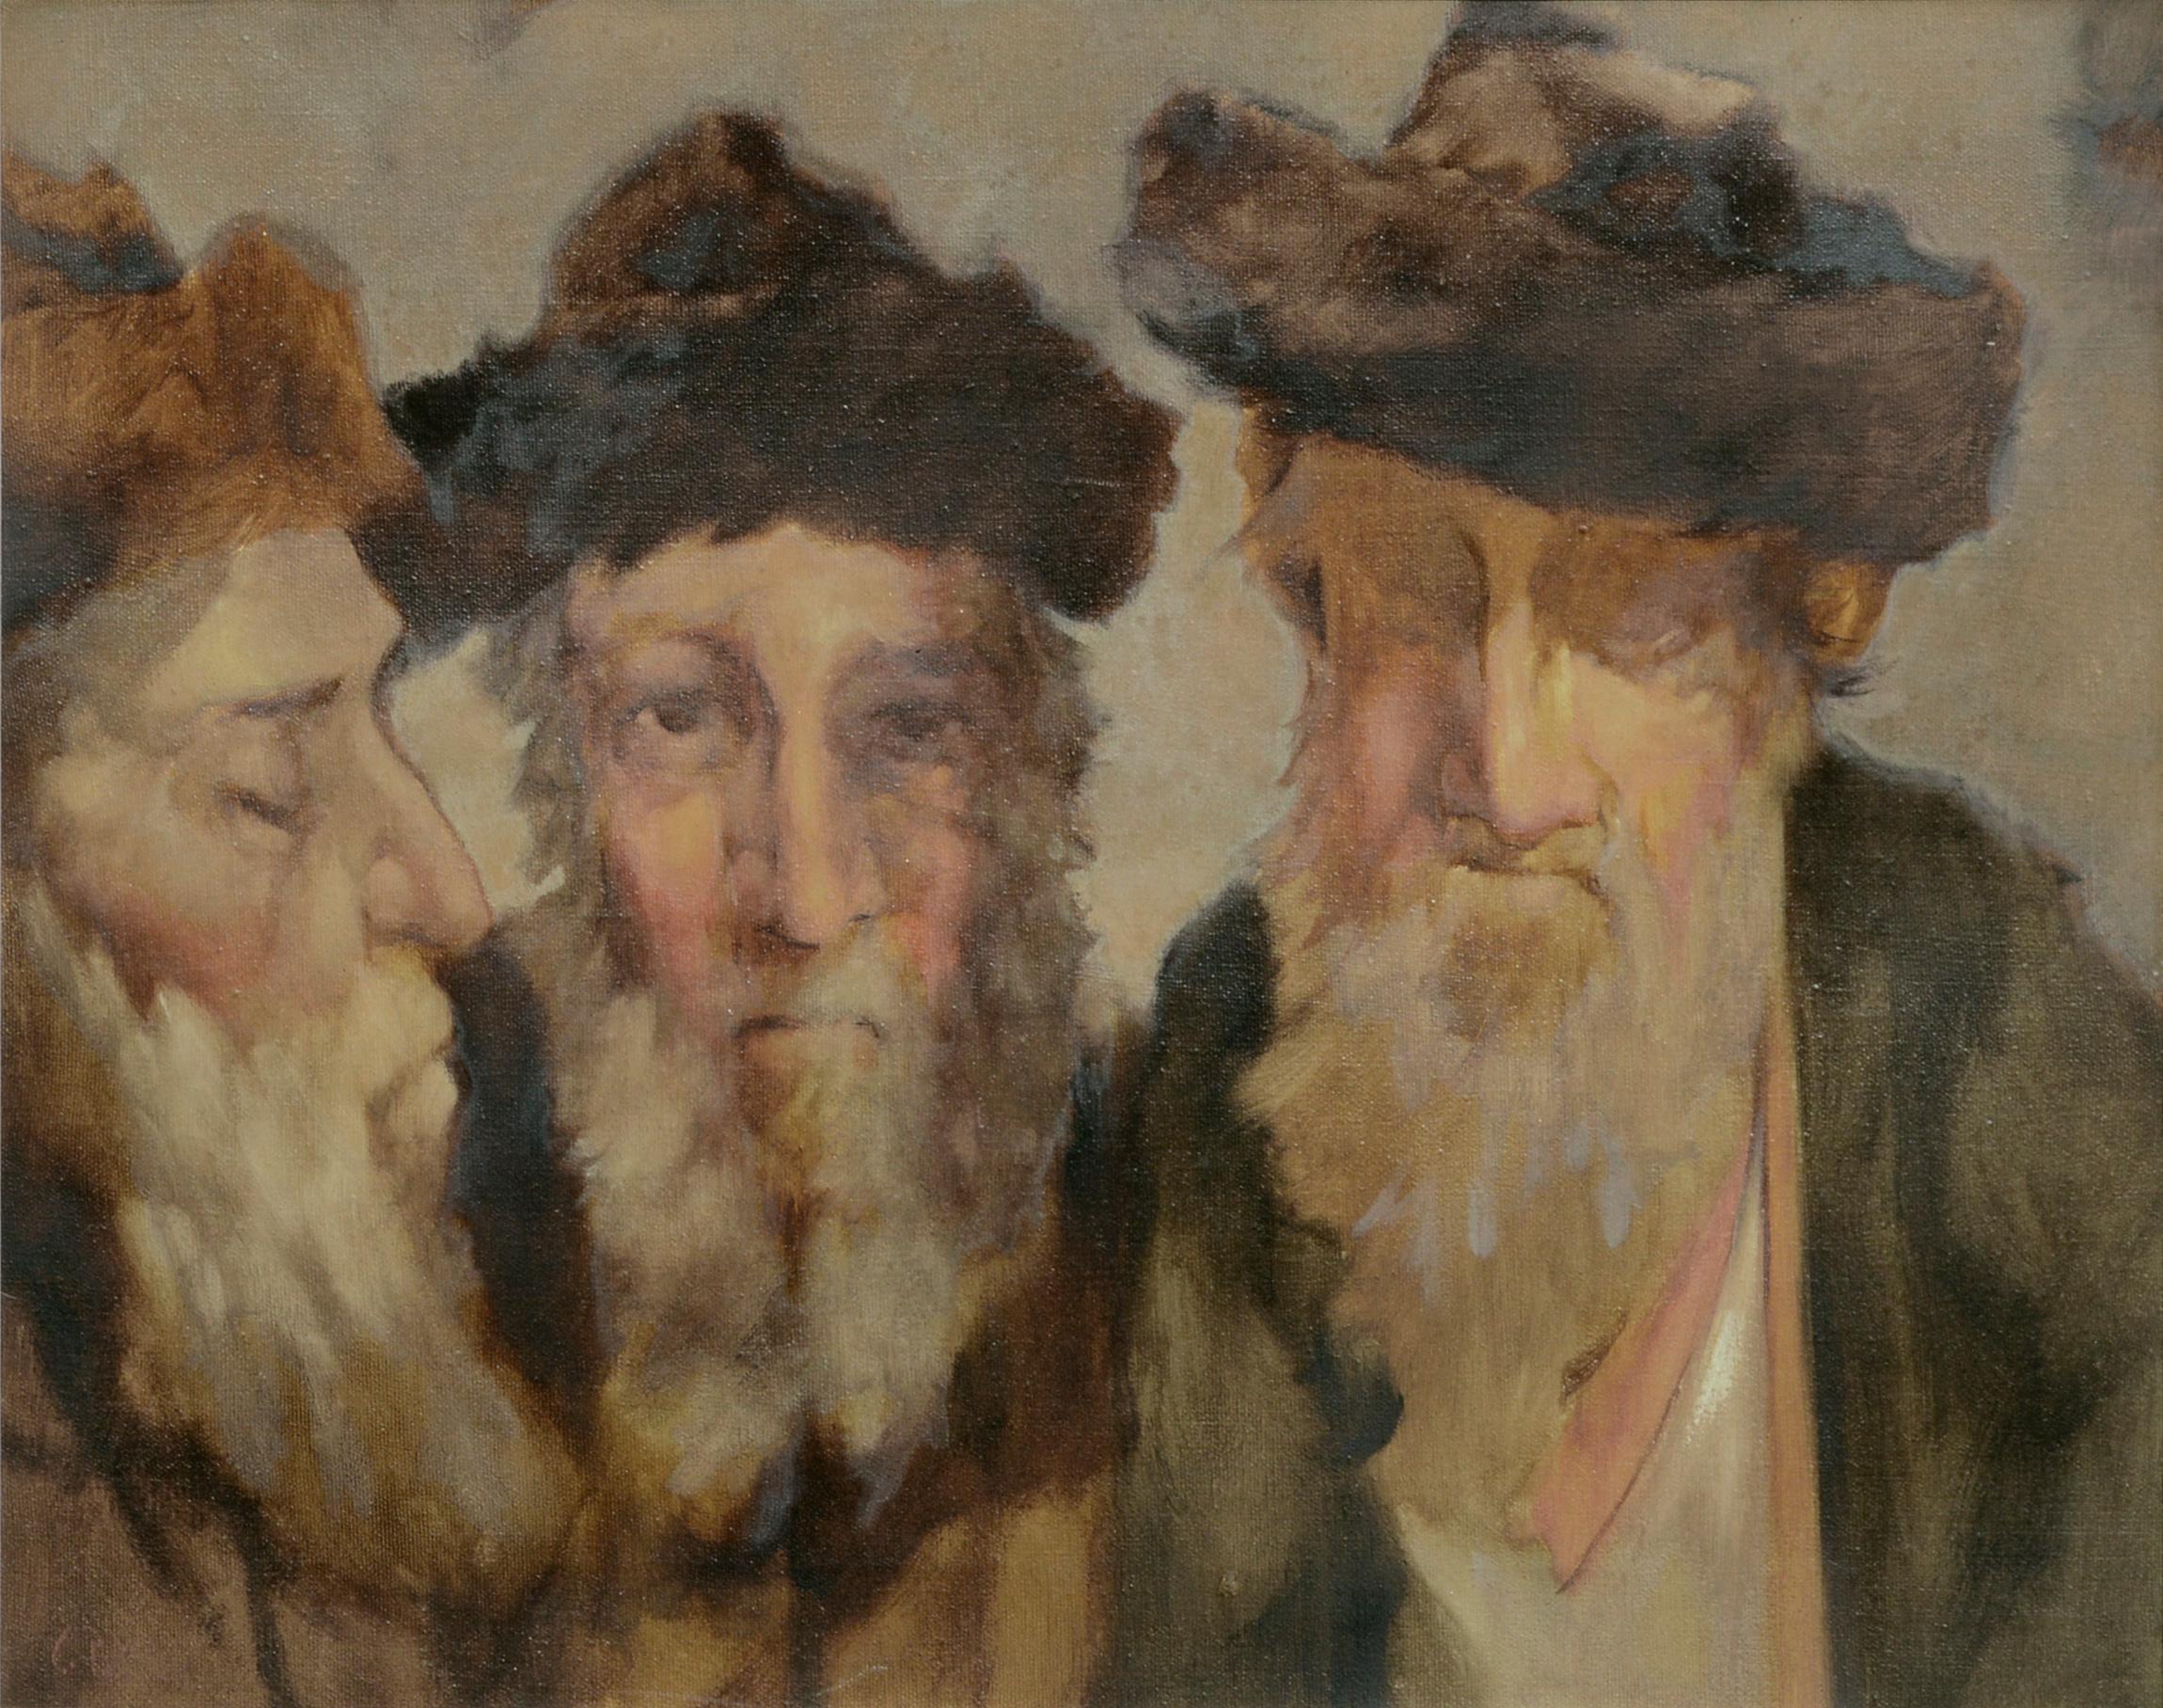 Portrait of three elderly men (Rabbis) by Charles Bragg (American, 1931-2017). Signed 